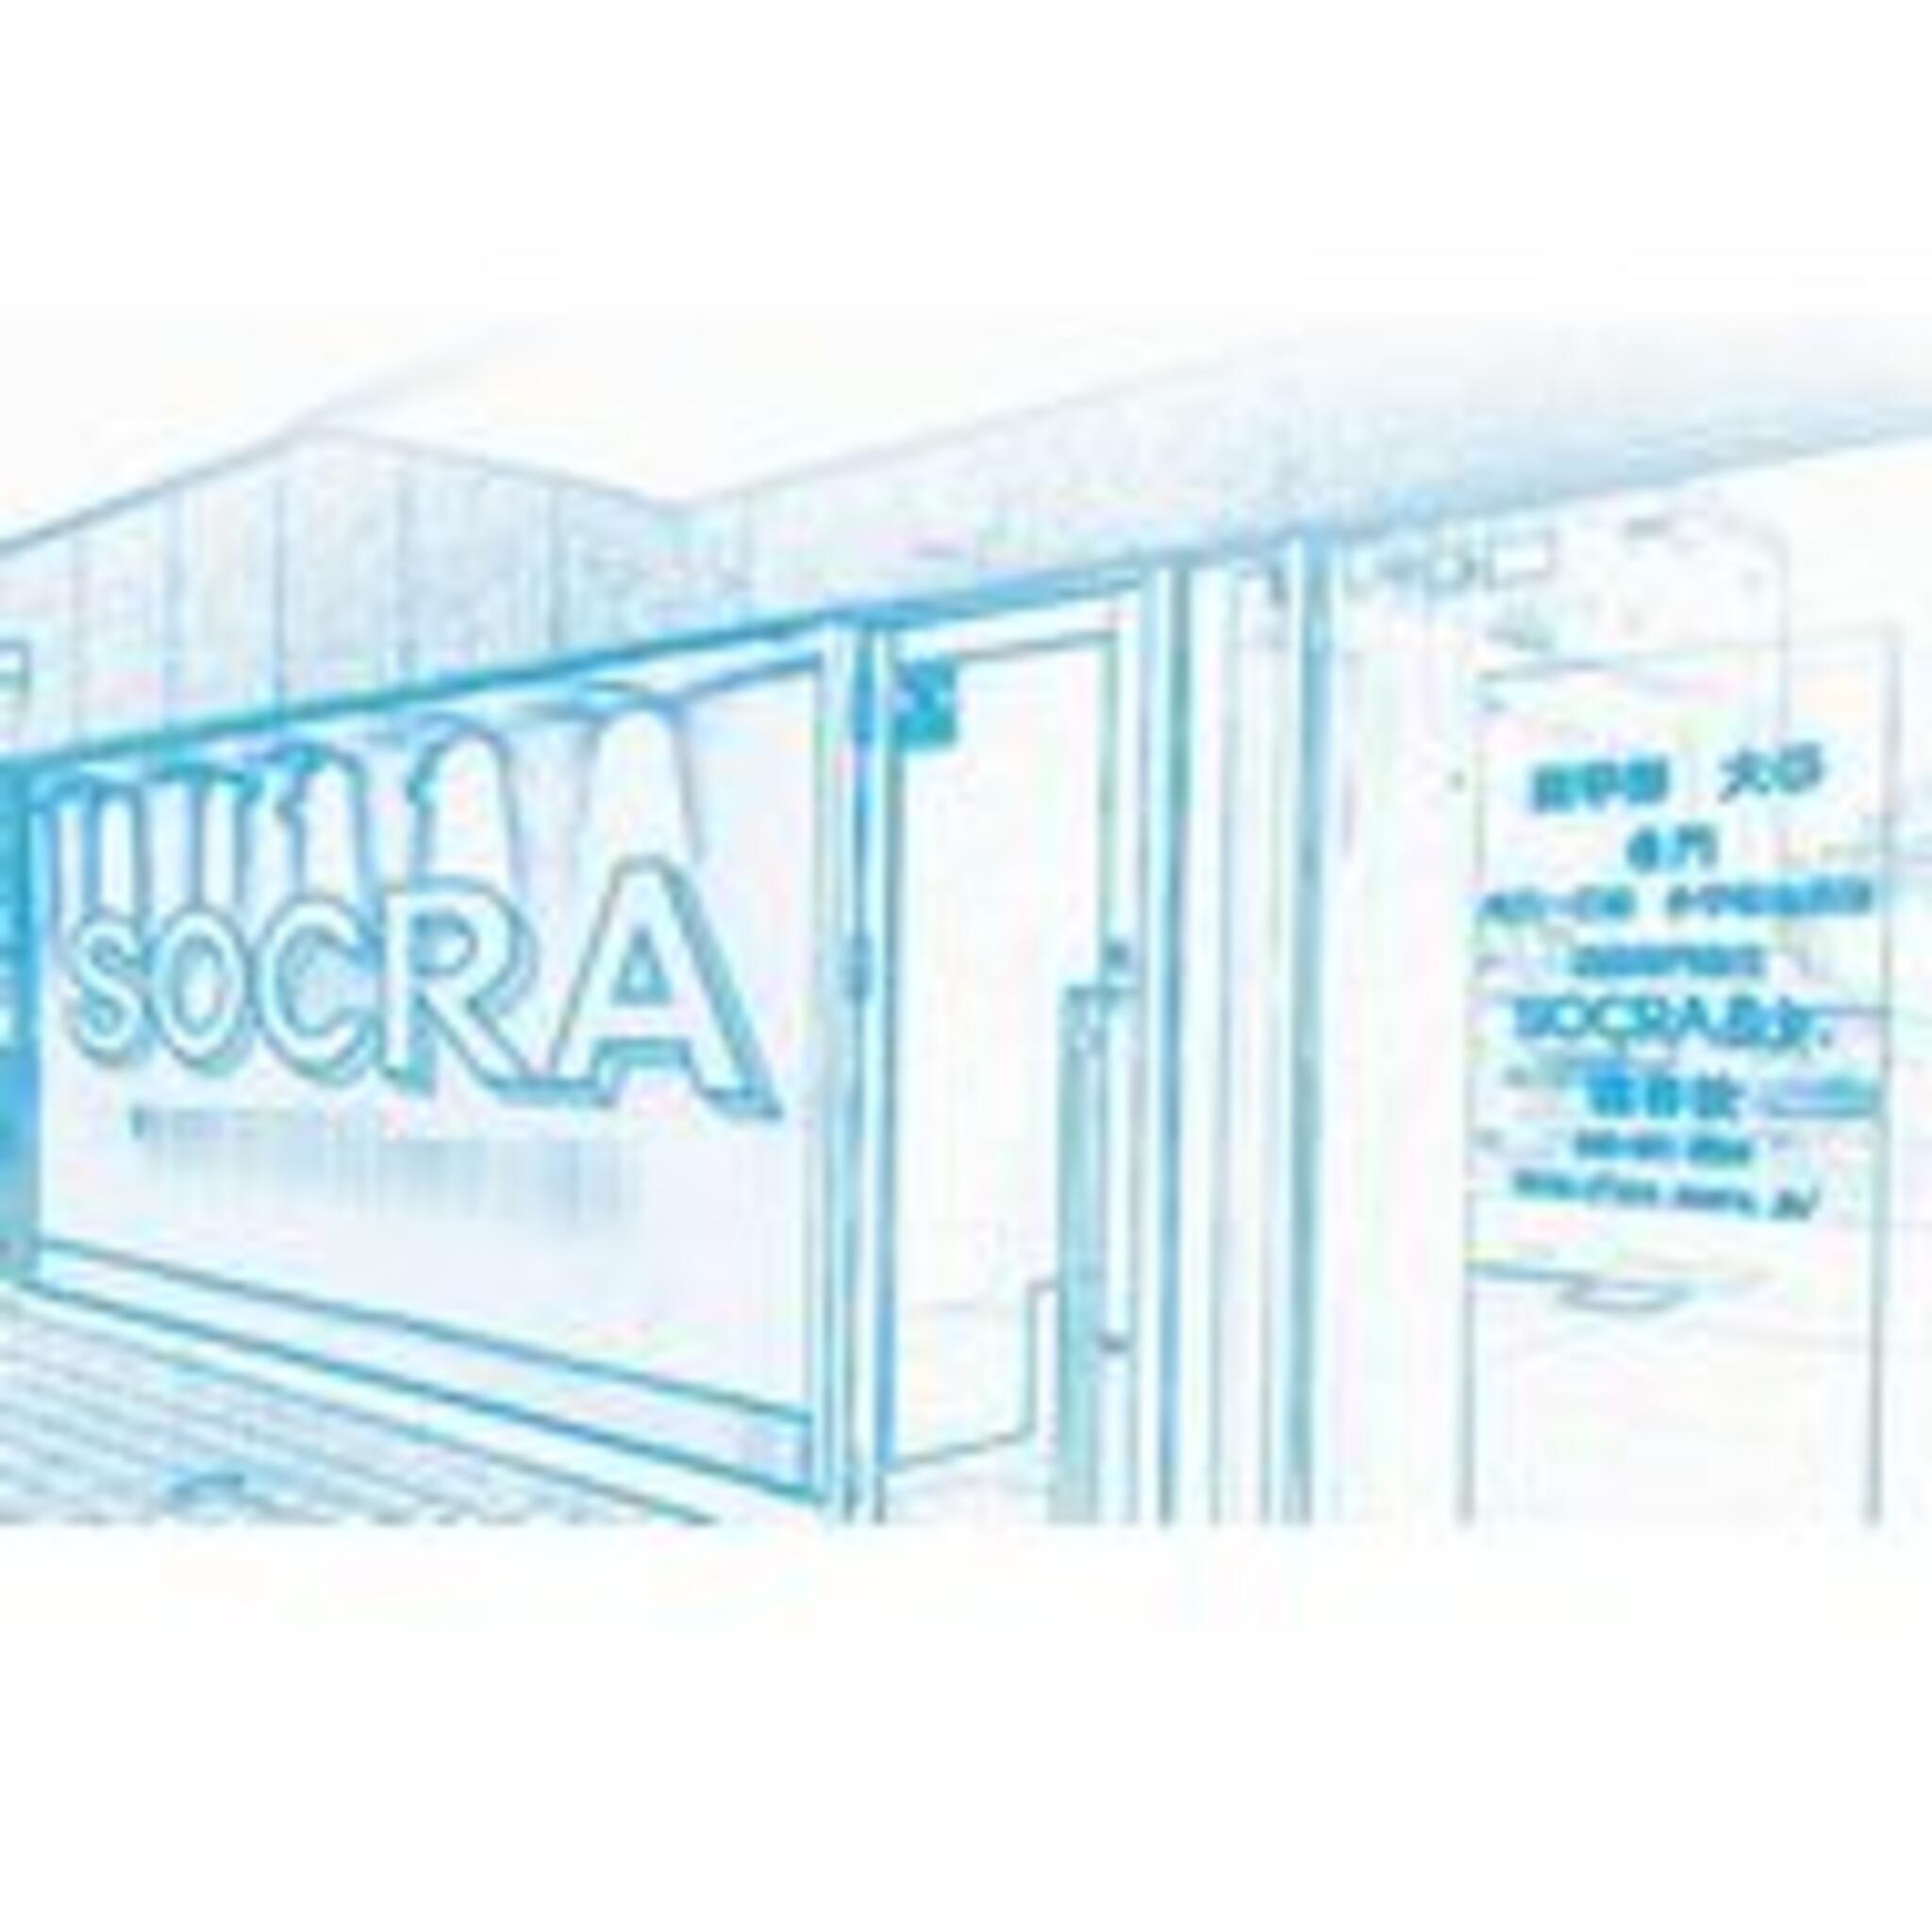 SOCRA-jr. 浦和校の代表写真7